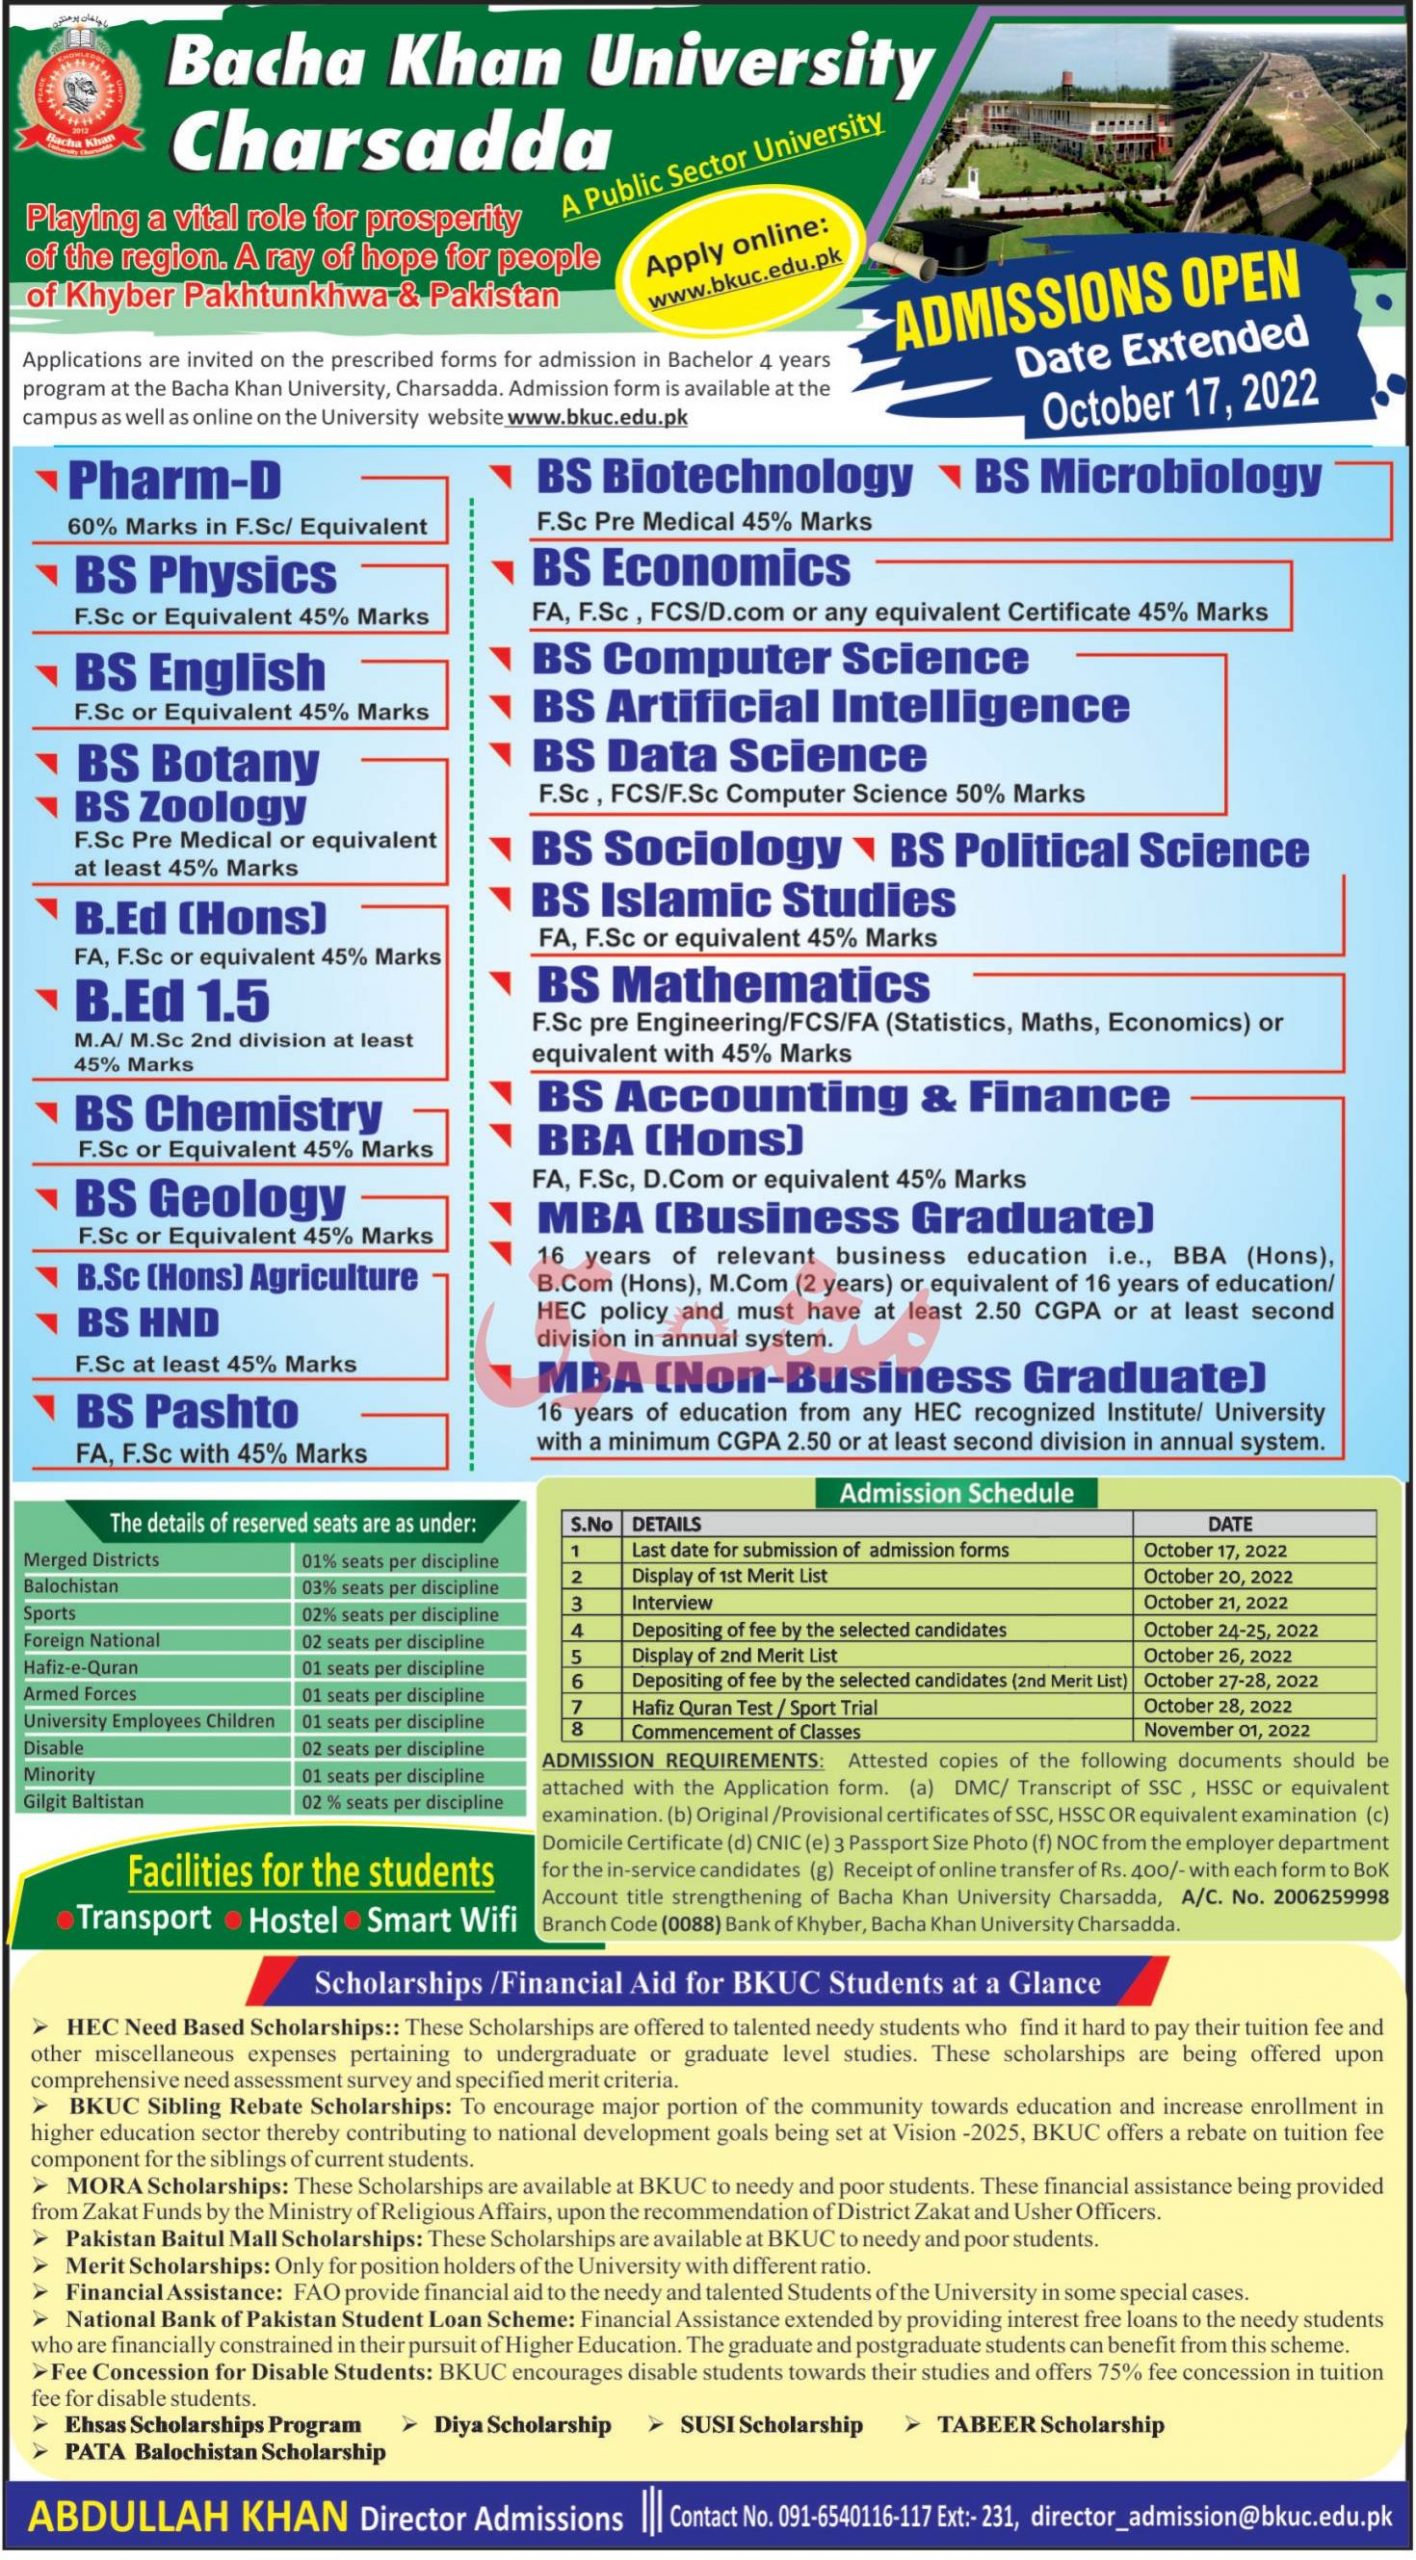 Bacha Khan University Charsadda Admission 2022 Schedule, Last Date